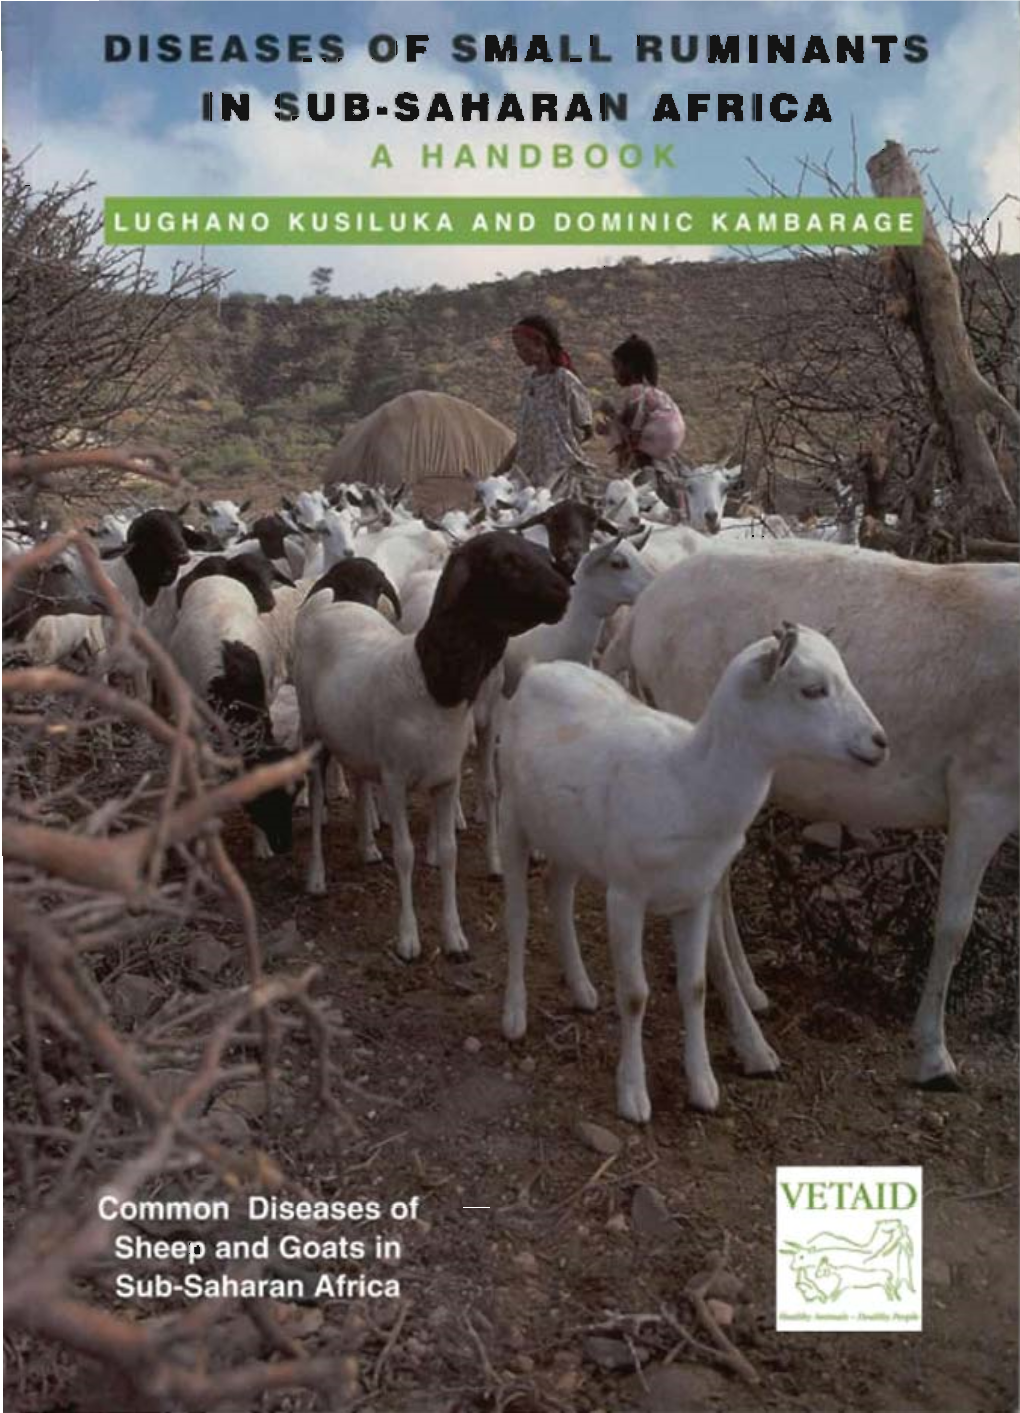 Diseases of Small Ruminants: a Handbook